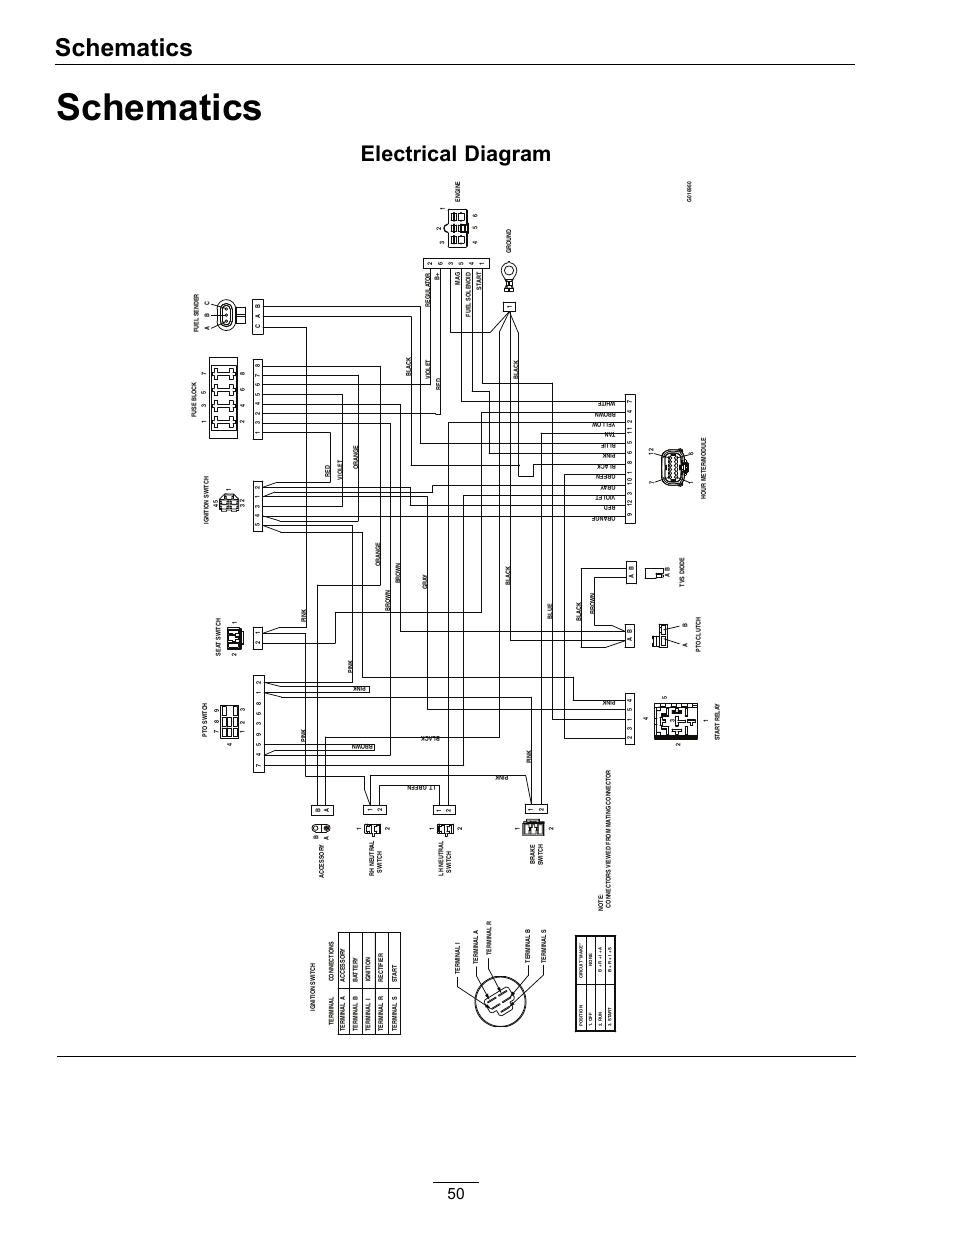 tpi baseboard heater wiring diagram